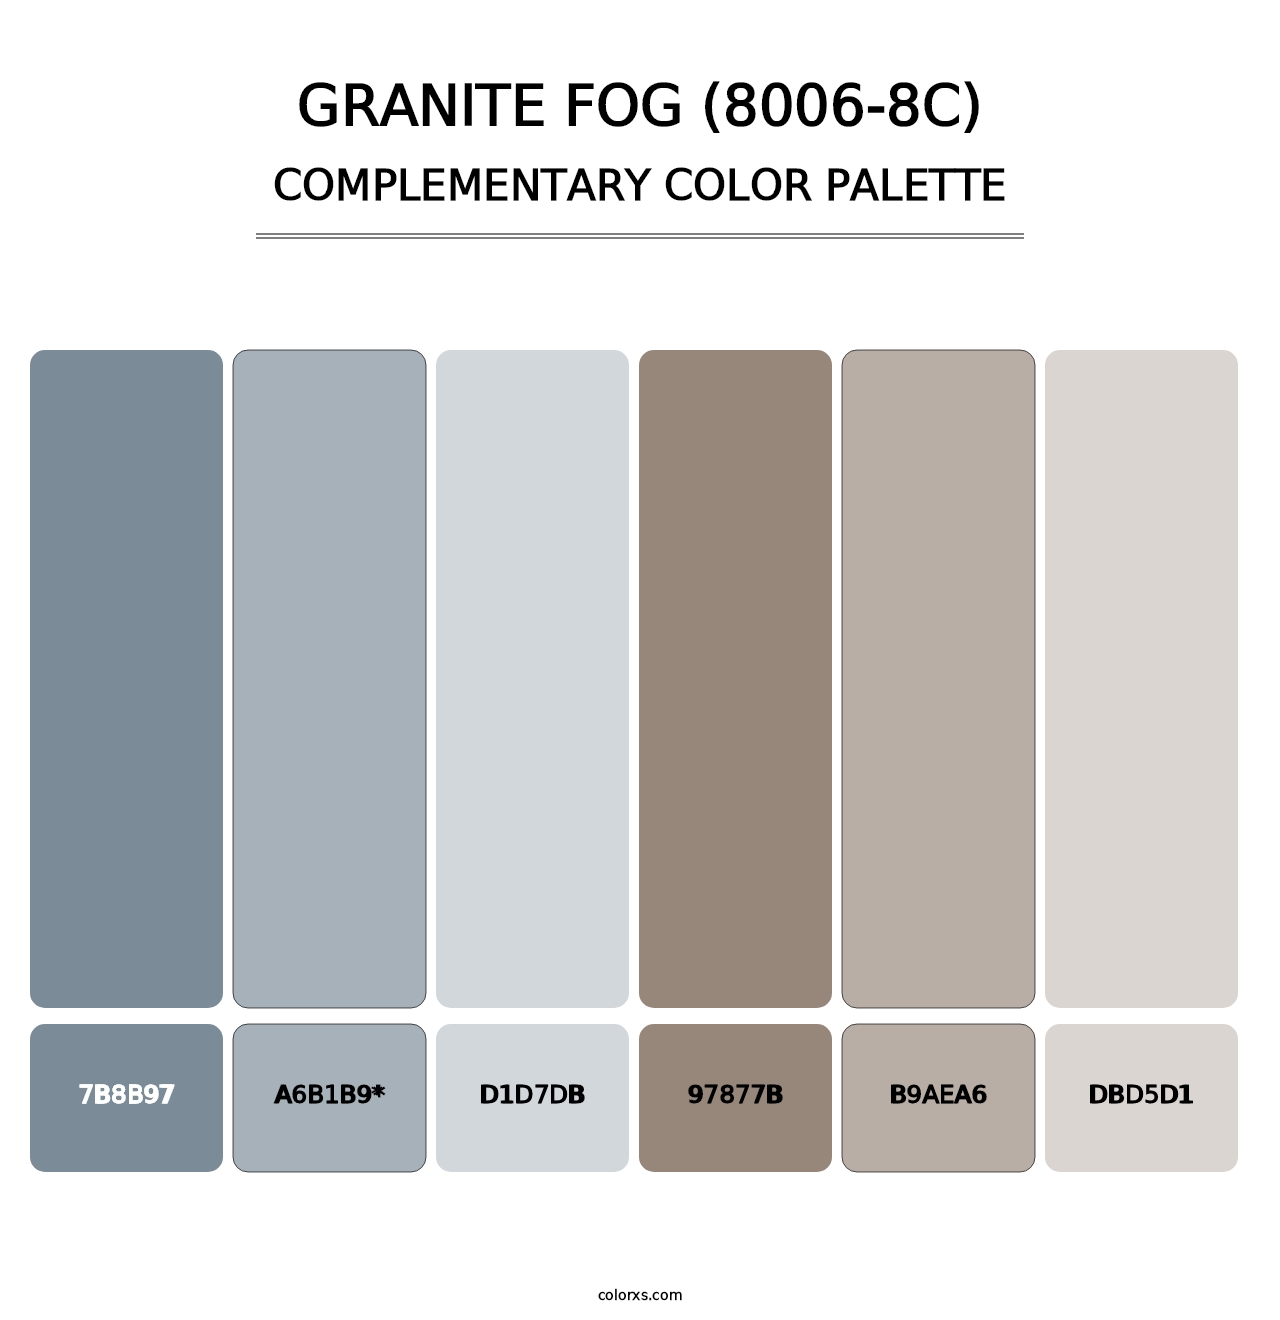 Granite Fog (8006-8C) - Complementary Color Palette